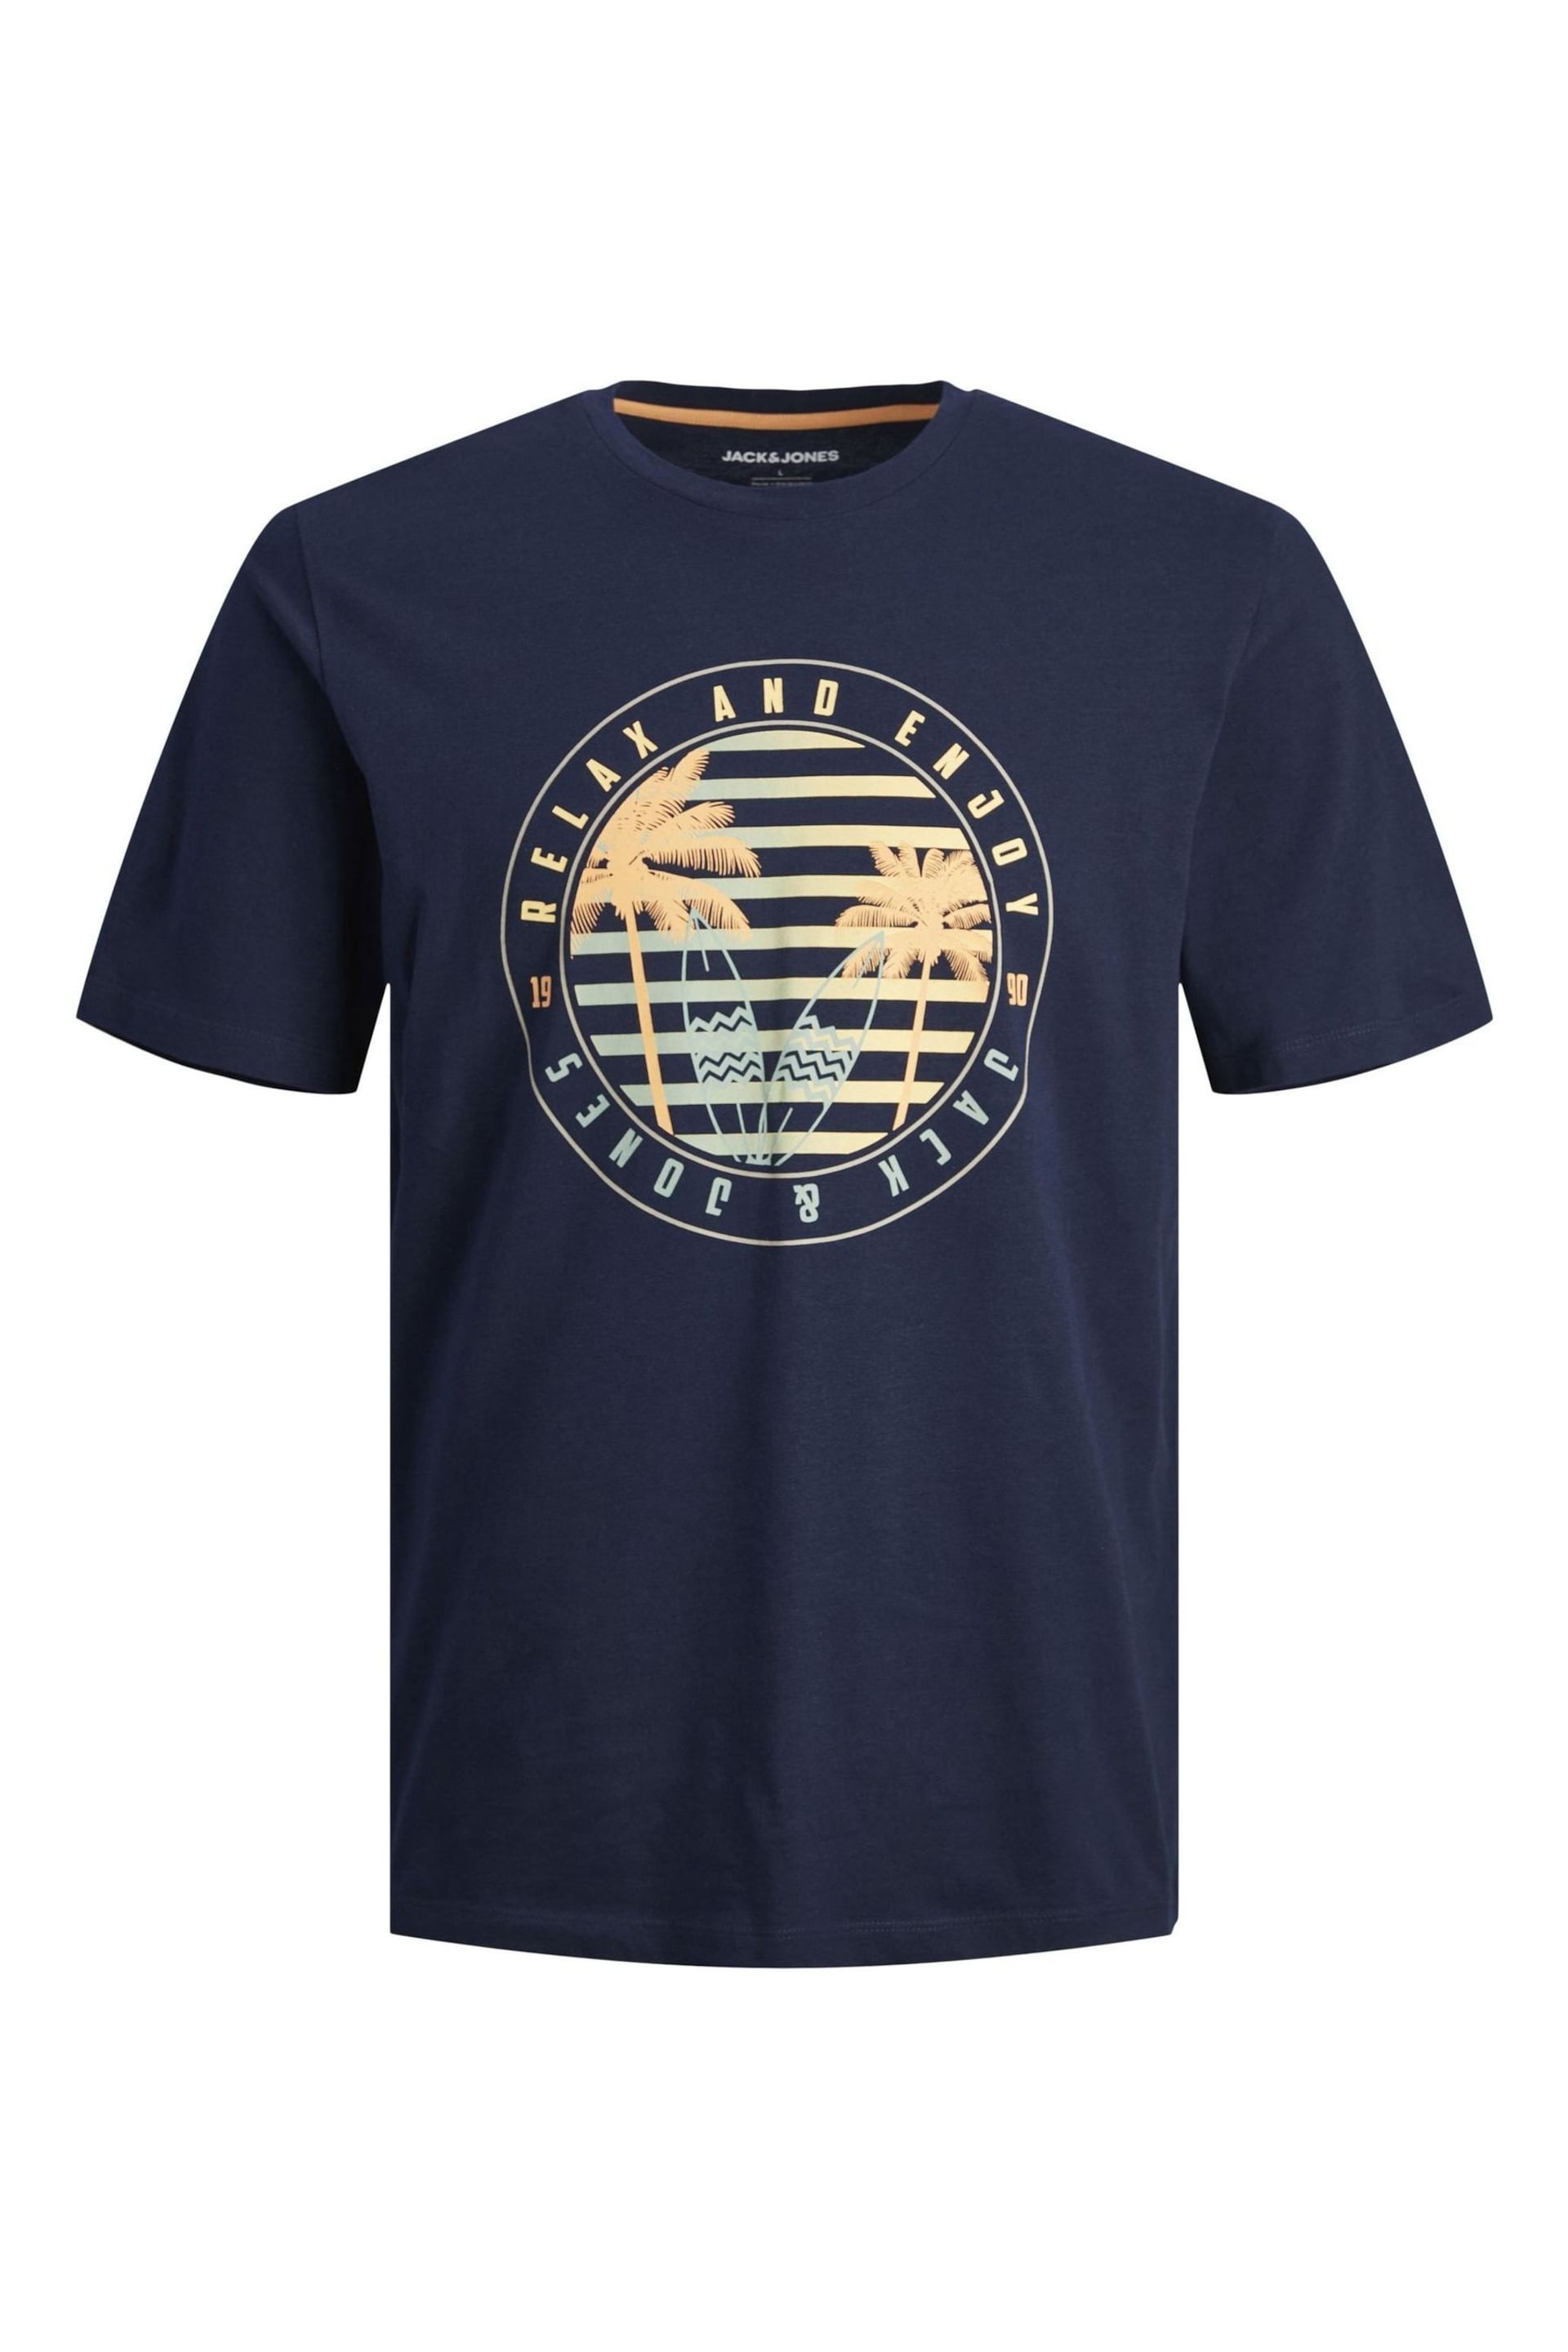 JACK & JONES Grey Short Sleeve Crew Neck Printed T-Shirt 3 Pack - Image 4 of 4